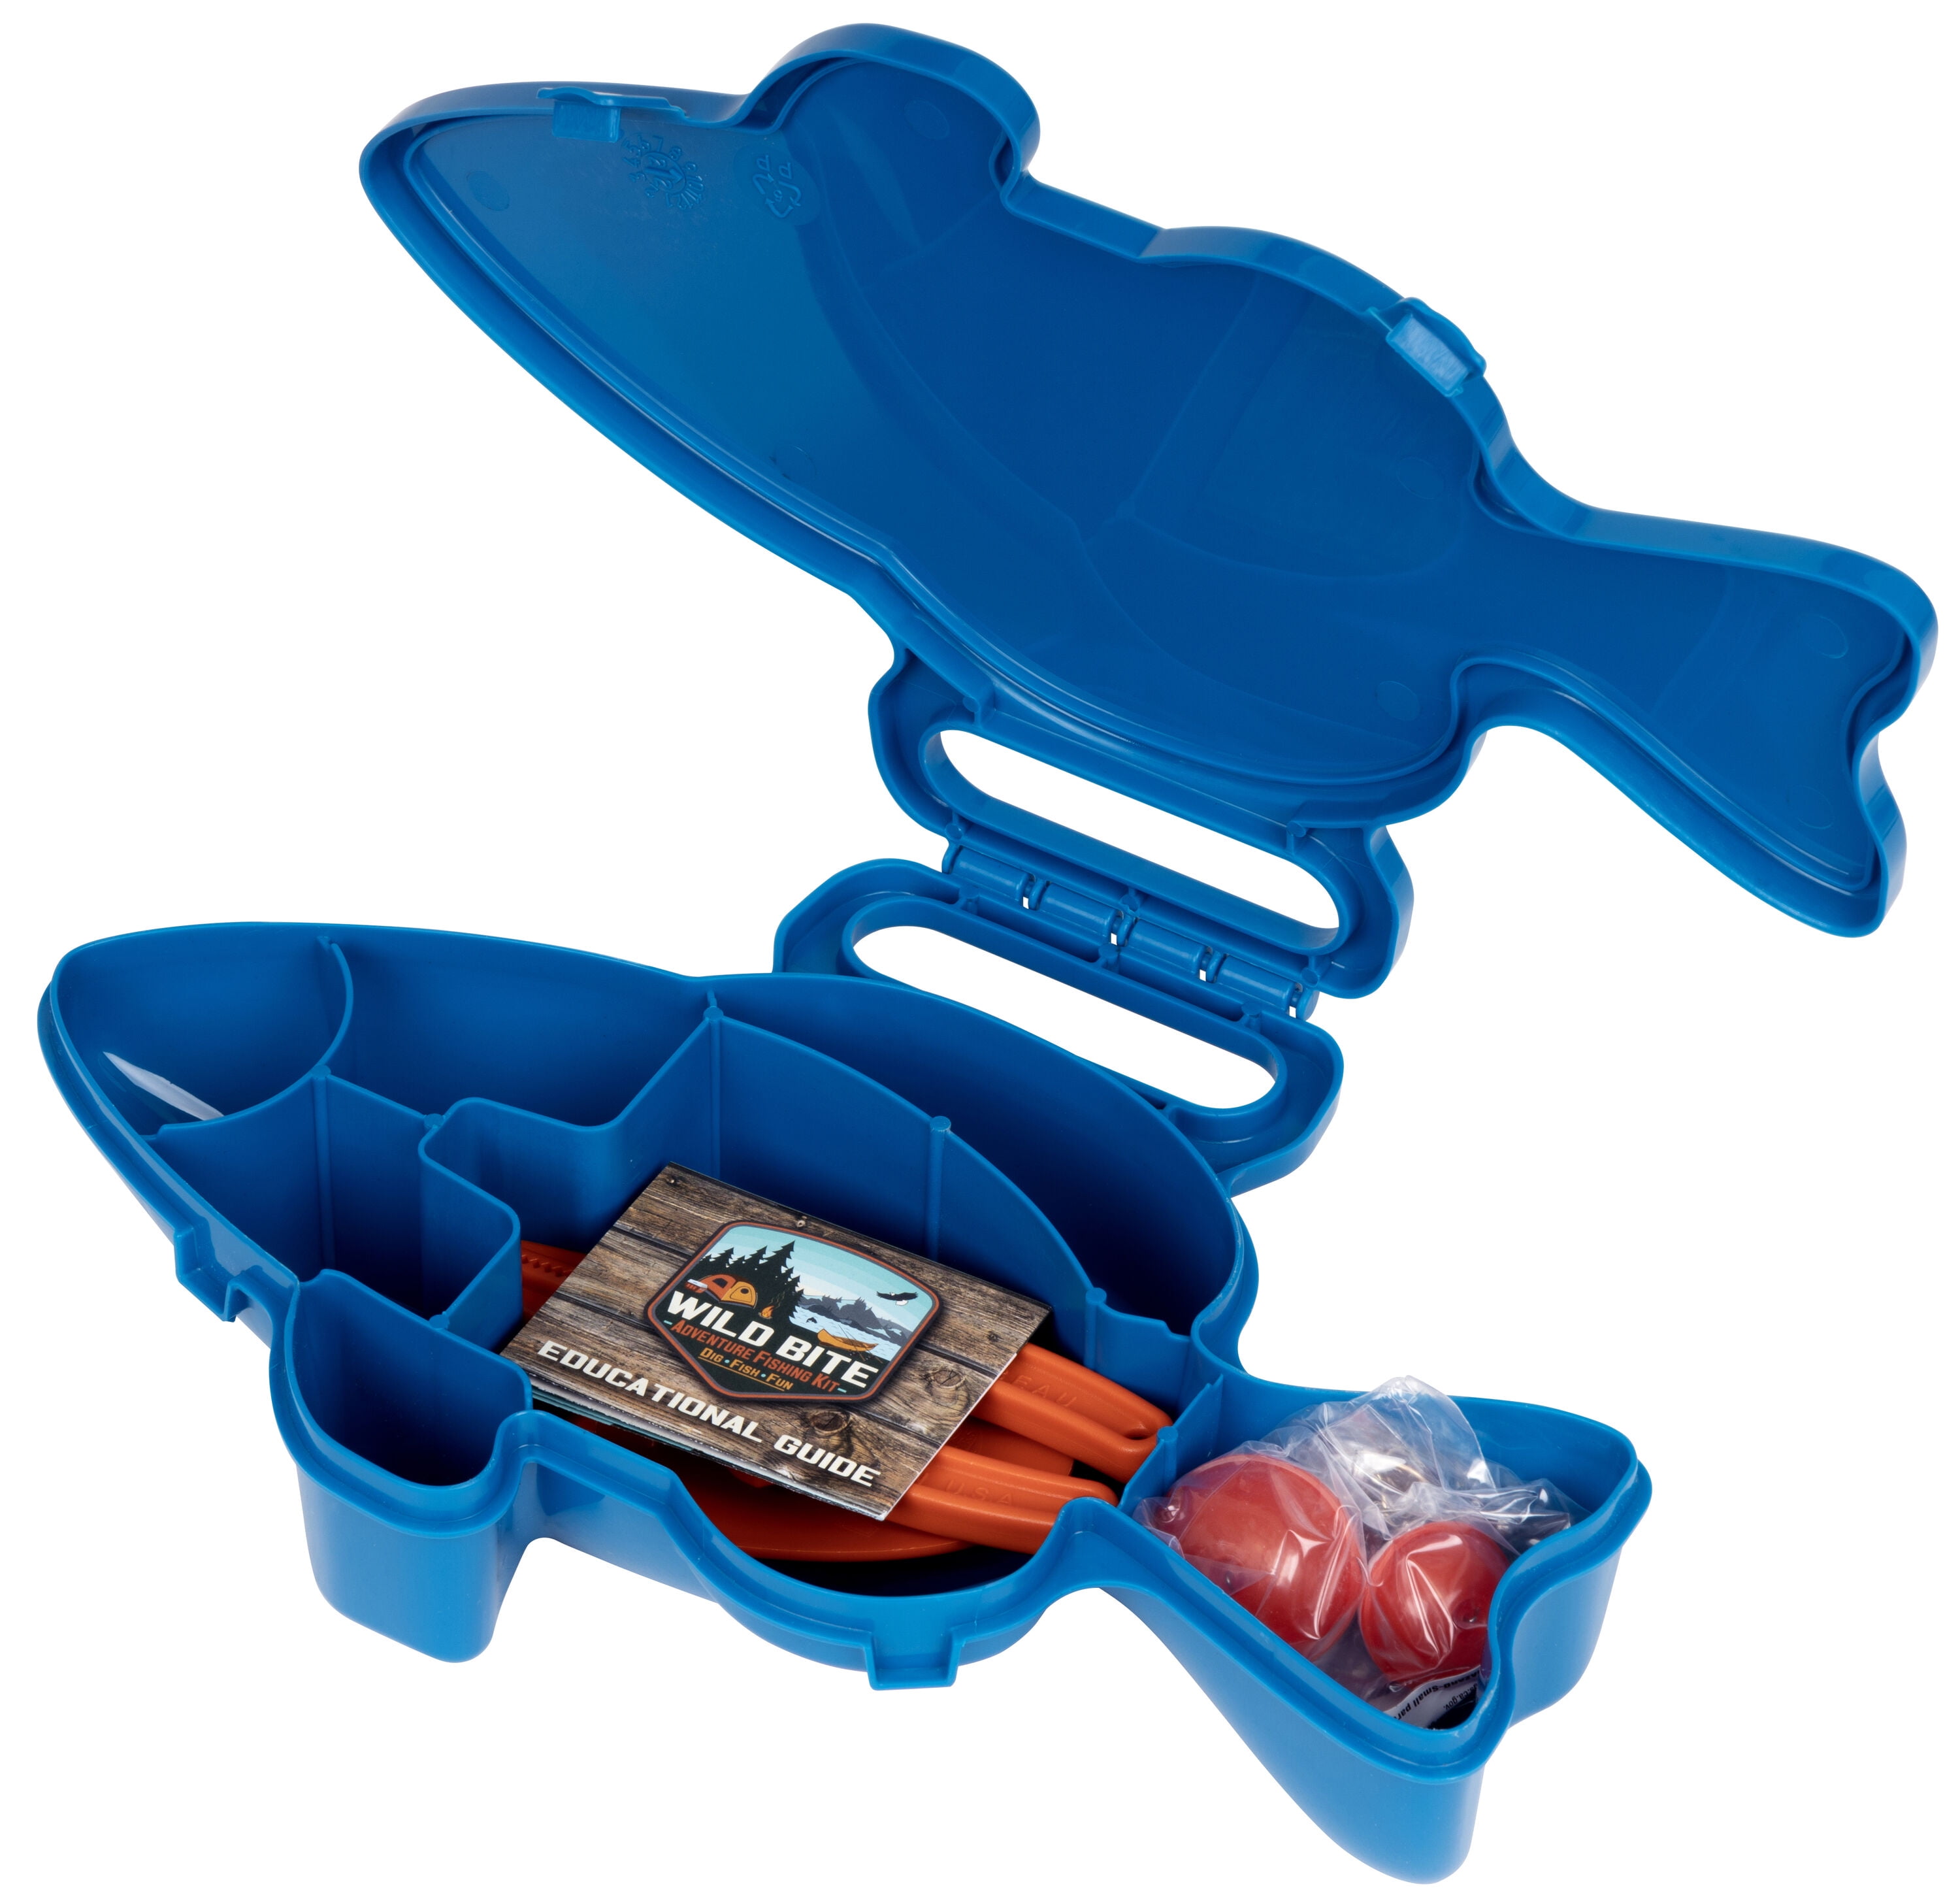 Flambeau Outdoors Wild Bite Panfish 25 Piece Kids Kit, Fishing Tackle Box,  Blue, Plastic, 10.75 inch 